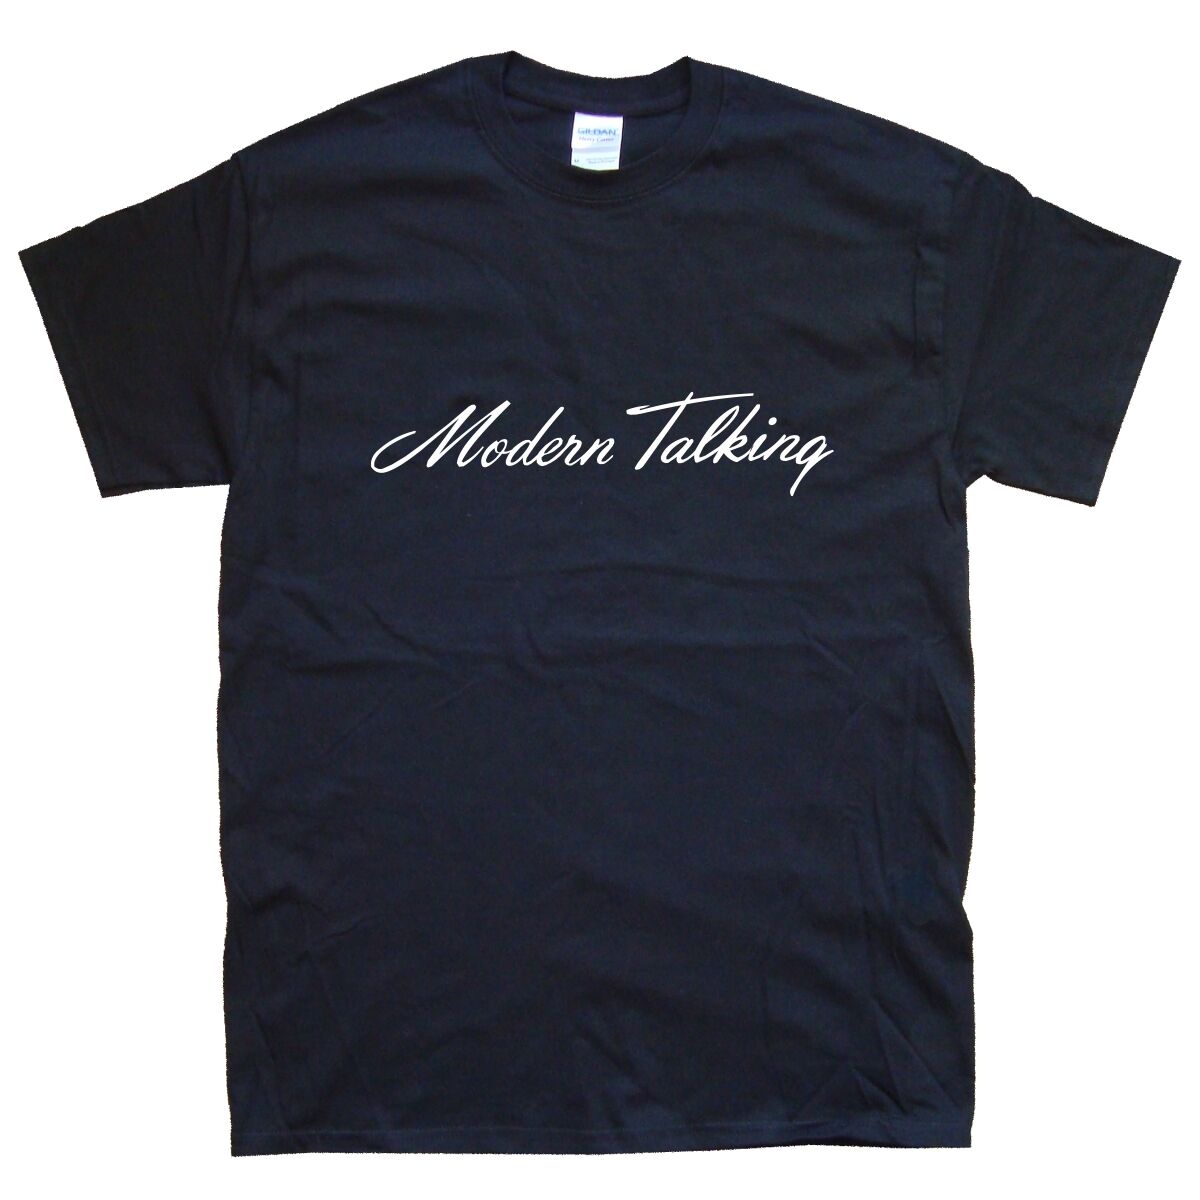 T-Shirts MODERN TALKING T-SHIRT sizes S M L XL XXL colours Black White ...